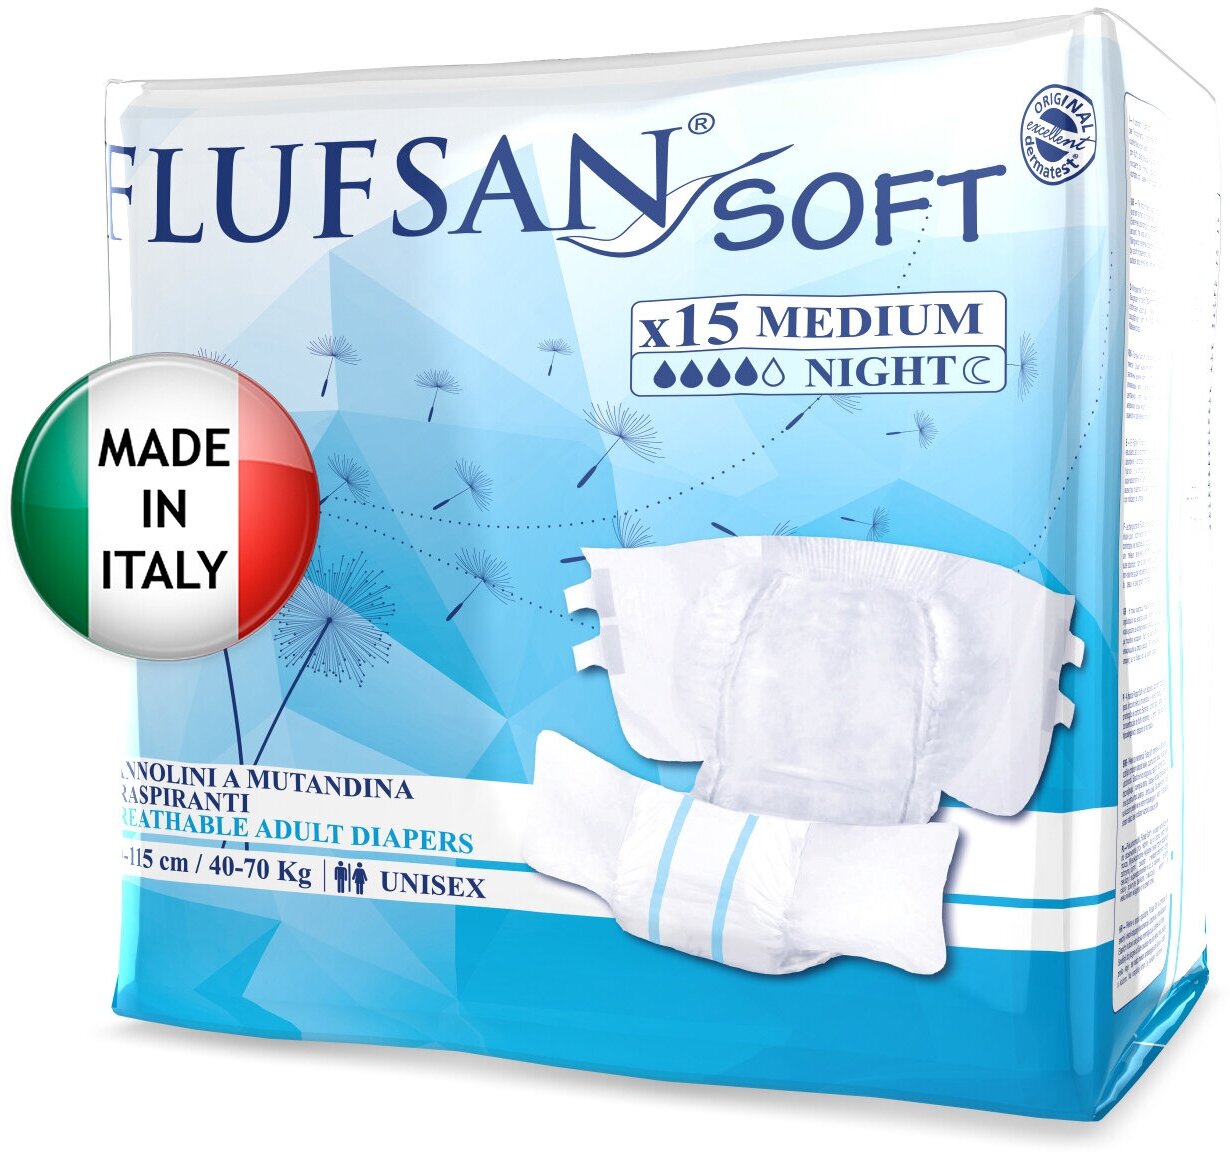 Flufsan Soft Night / Флюфсан Софт Найт - подгузники для взрослых, M, 15 шт.